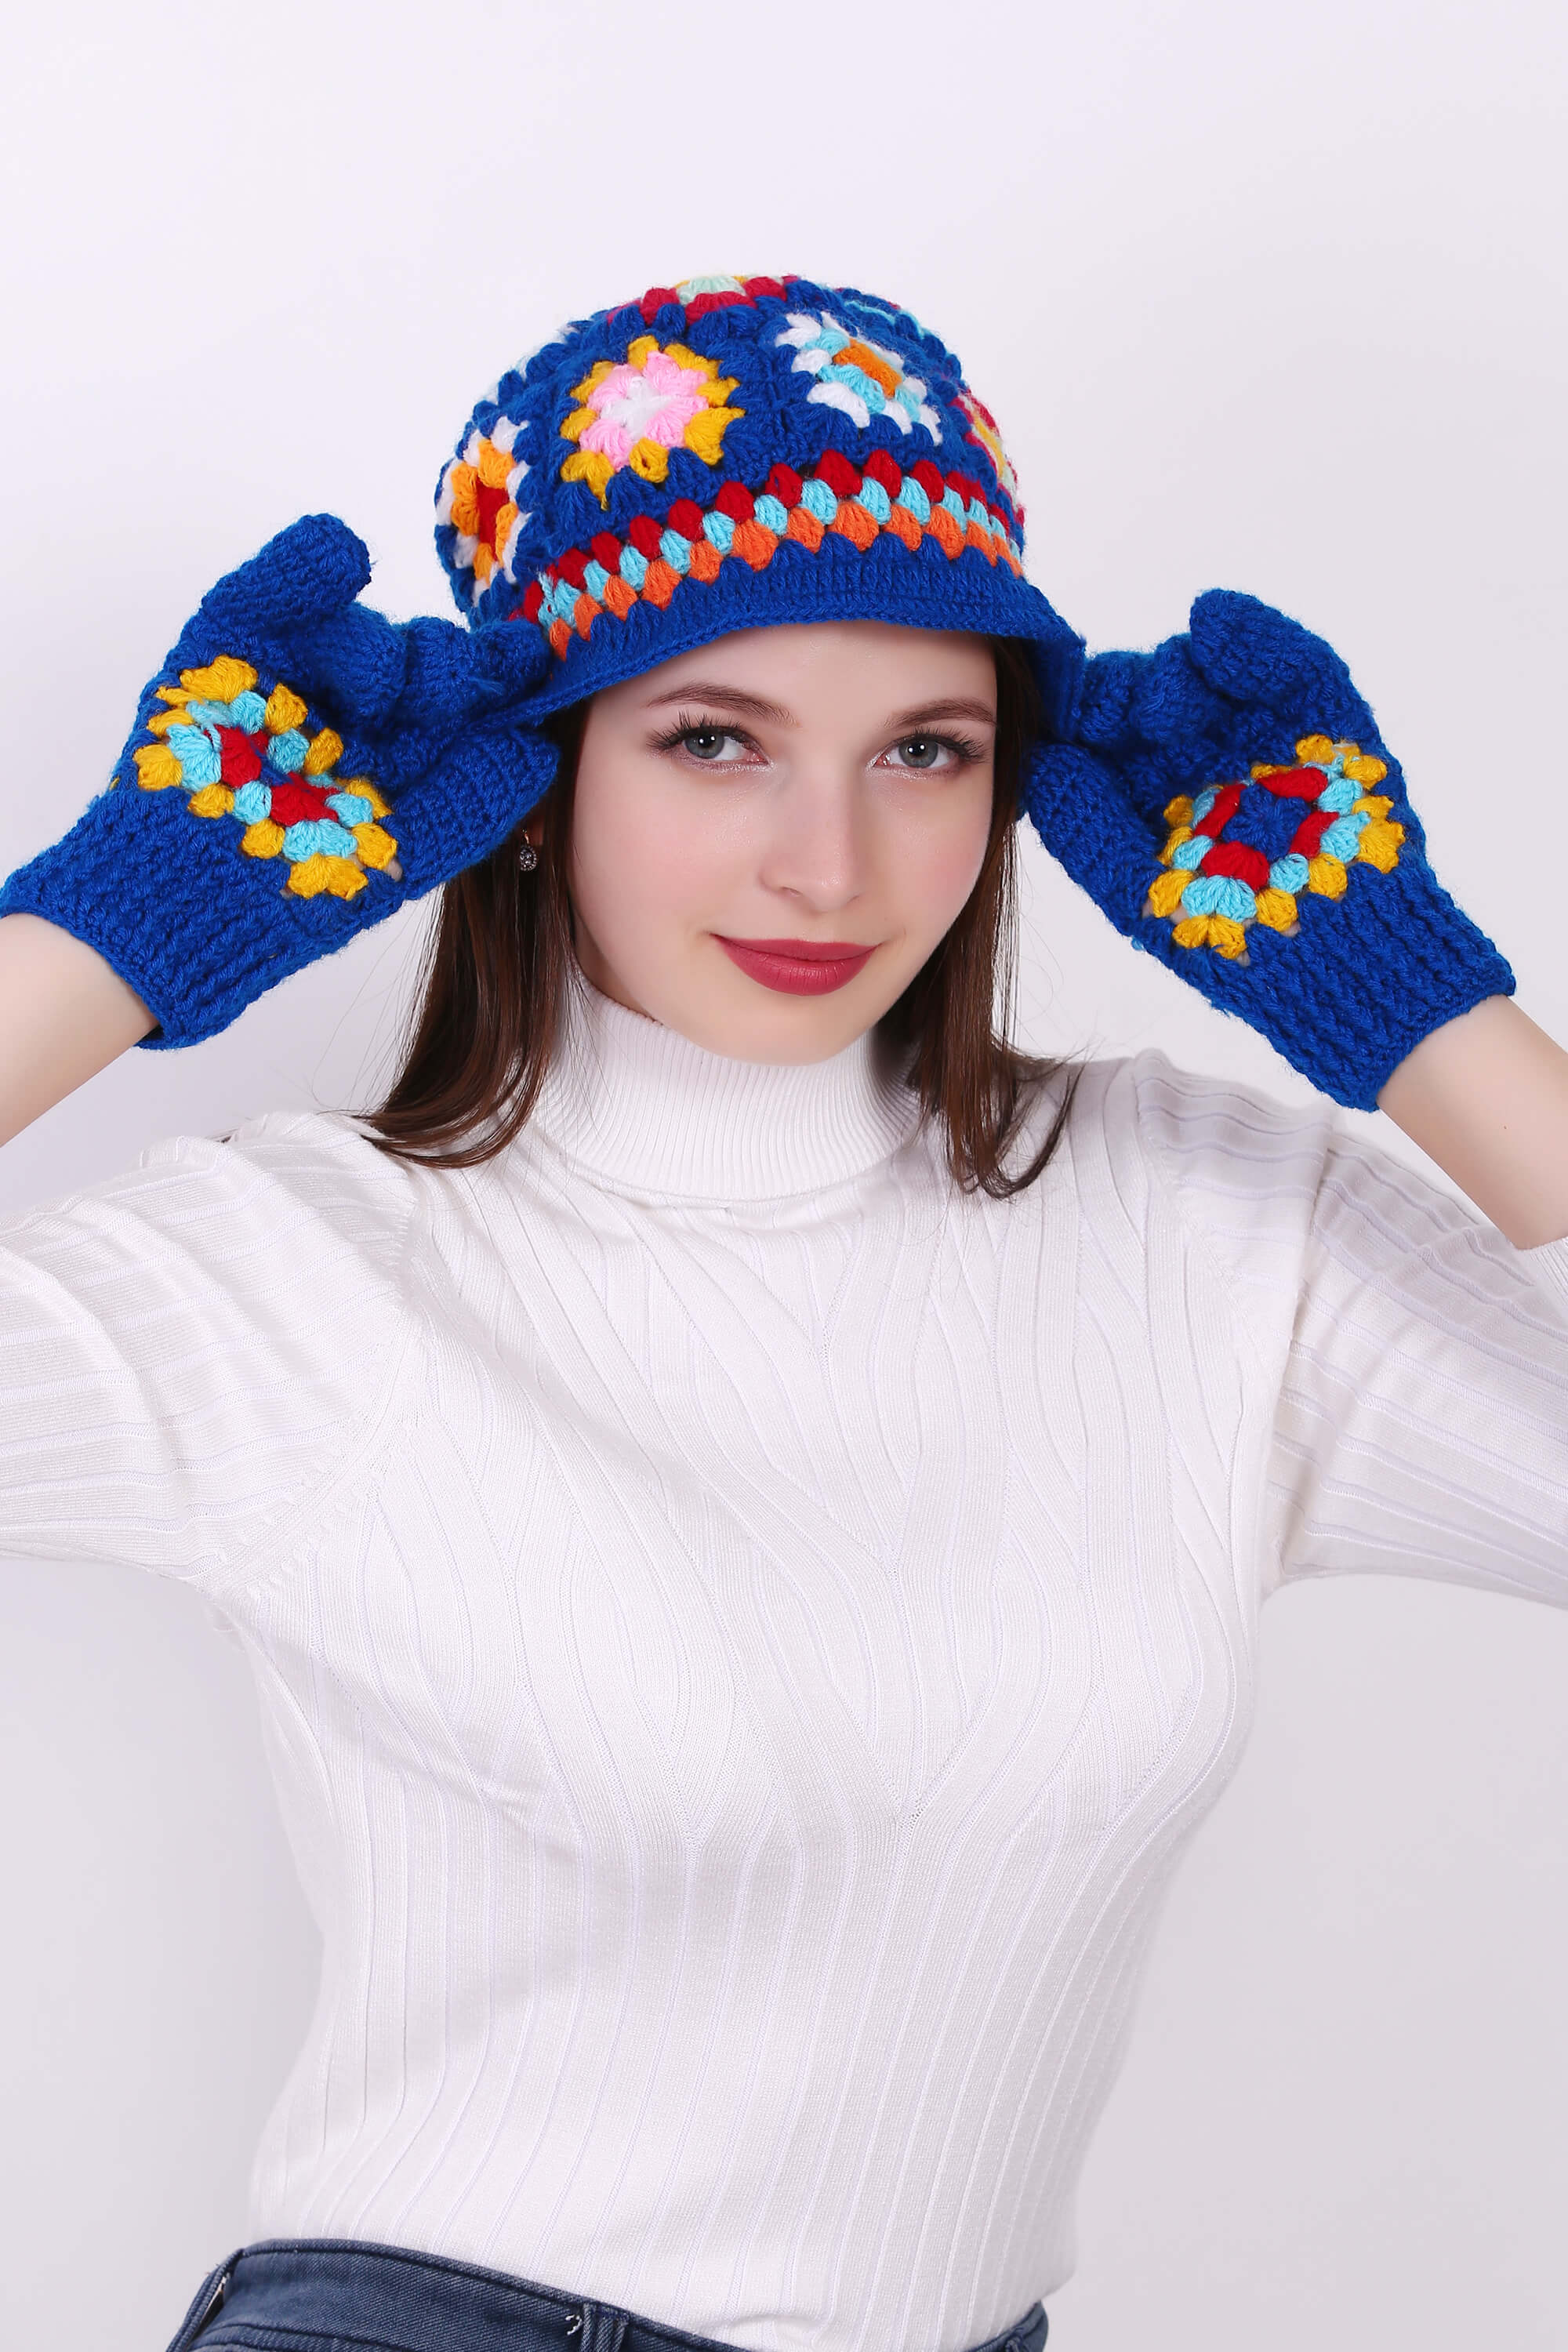 Crochet Comfort Granny Cap with Gloves